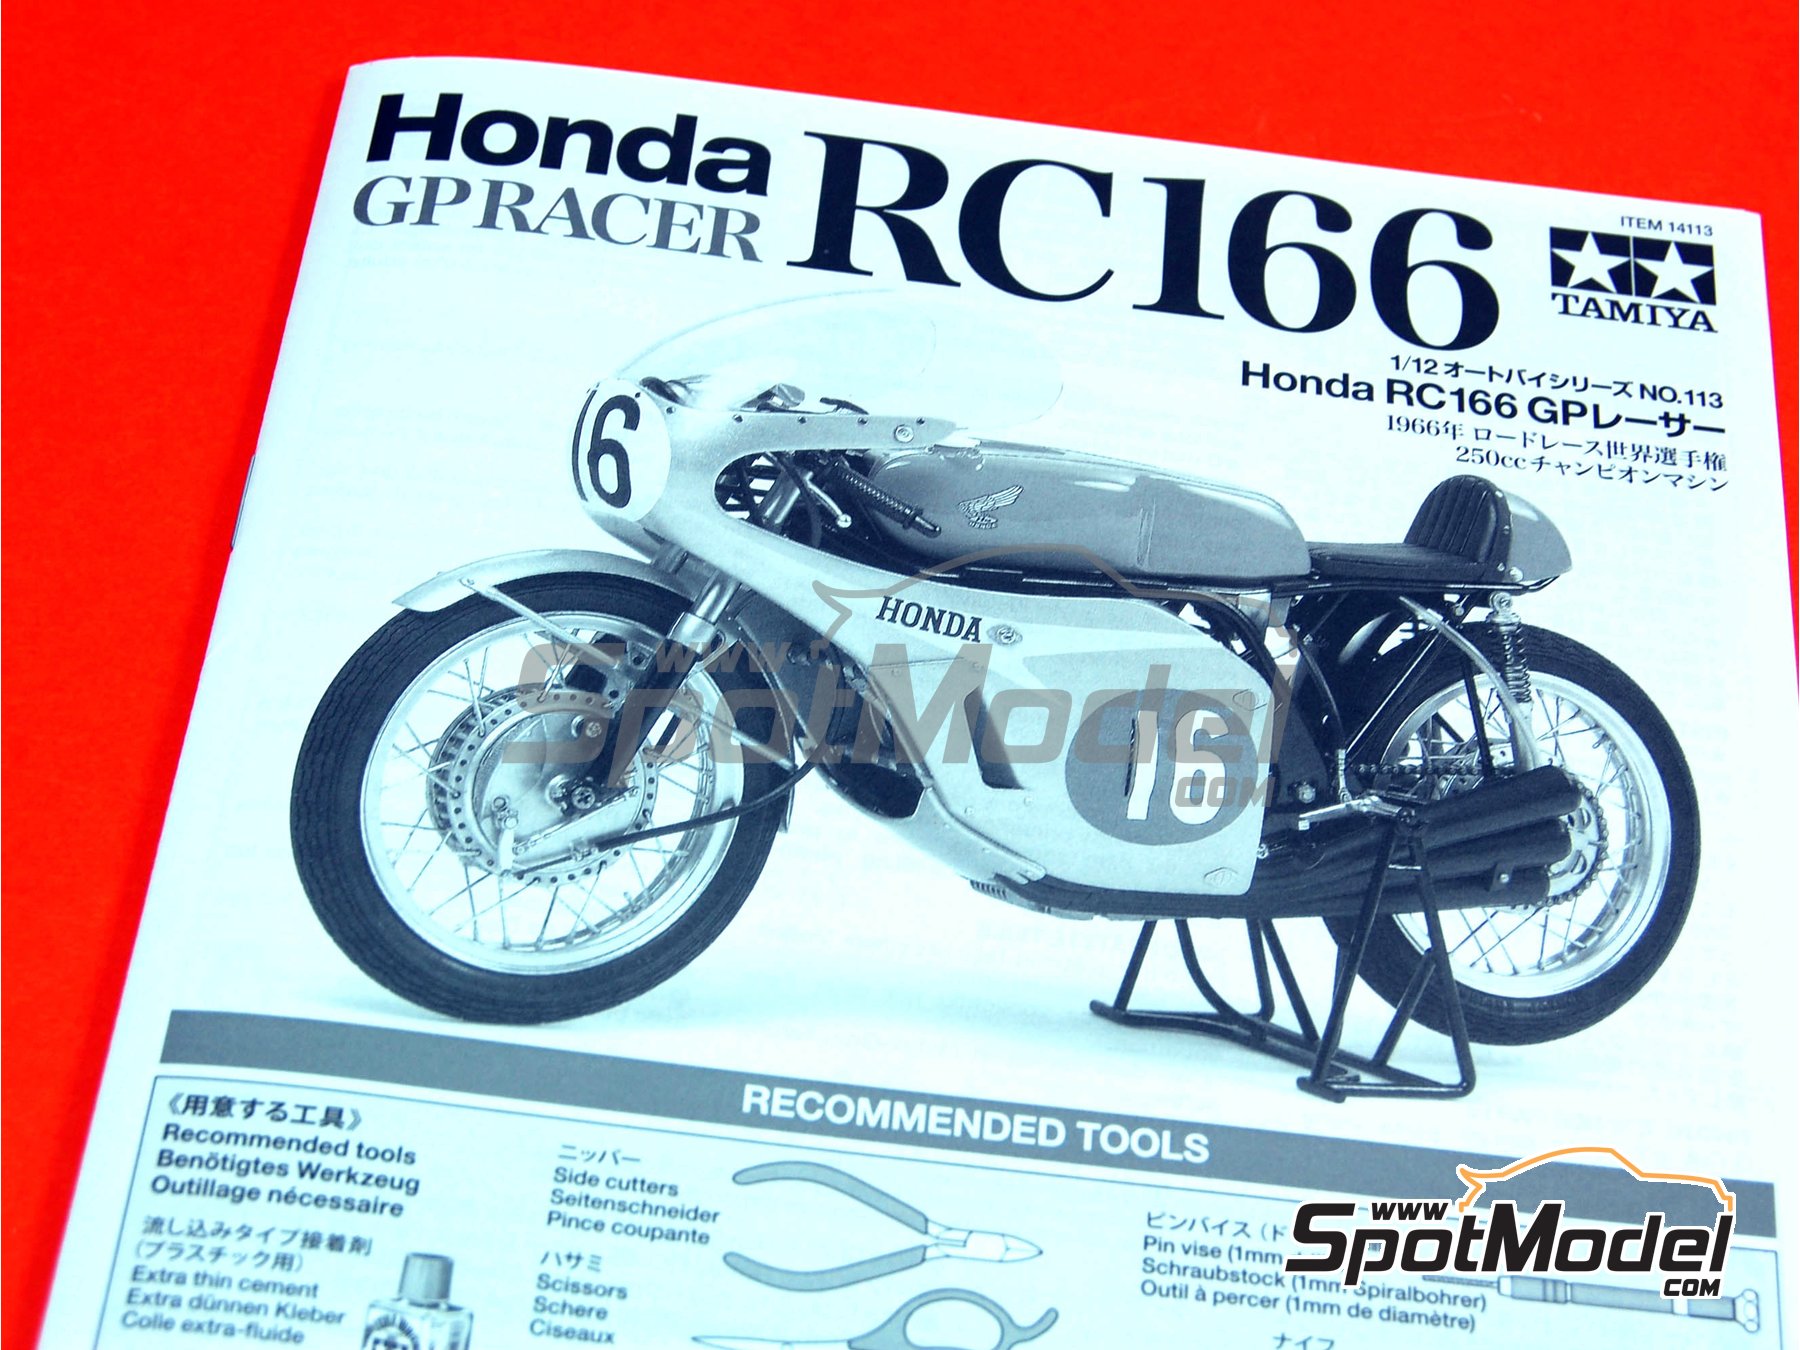 TAMIYA 1/12 Honda RC166 GP RACER 14113 with Tracking No 